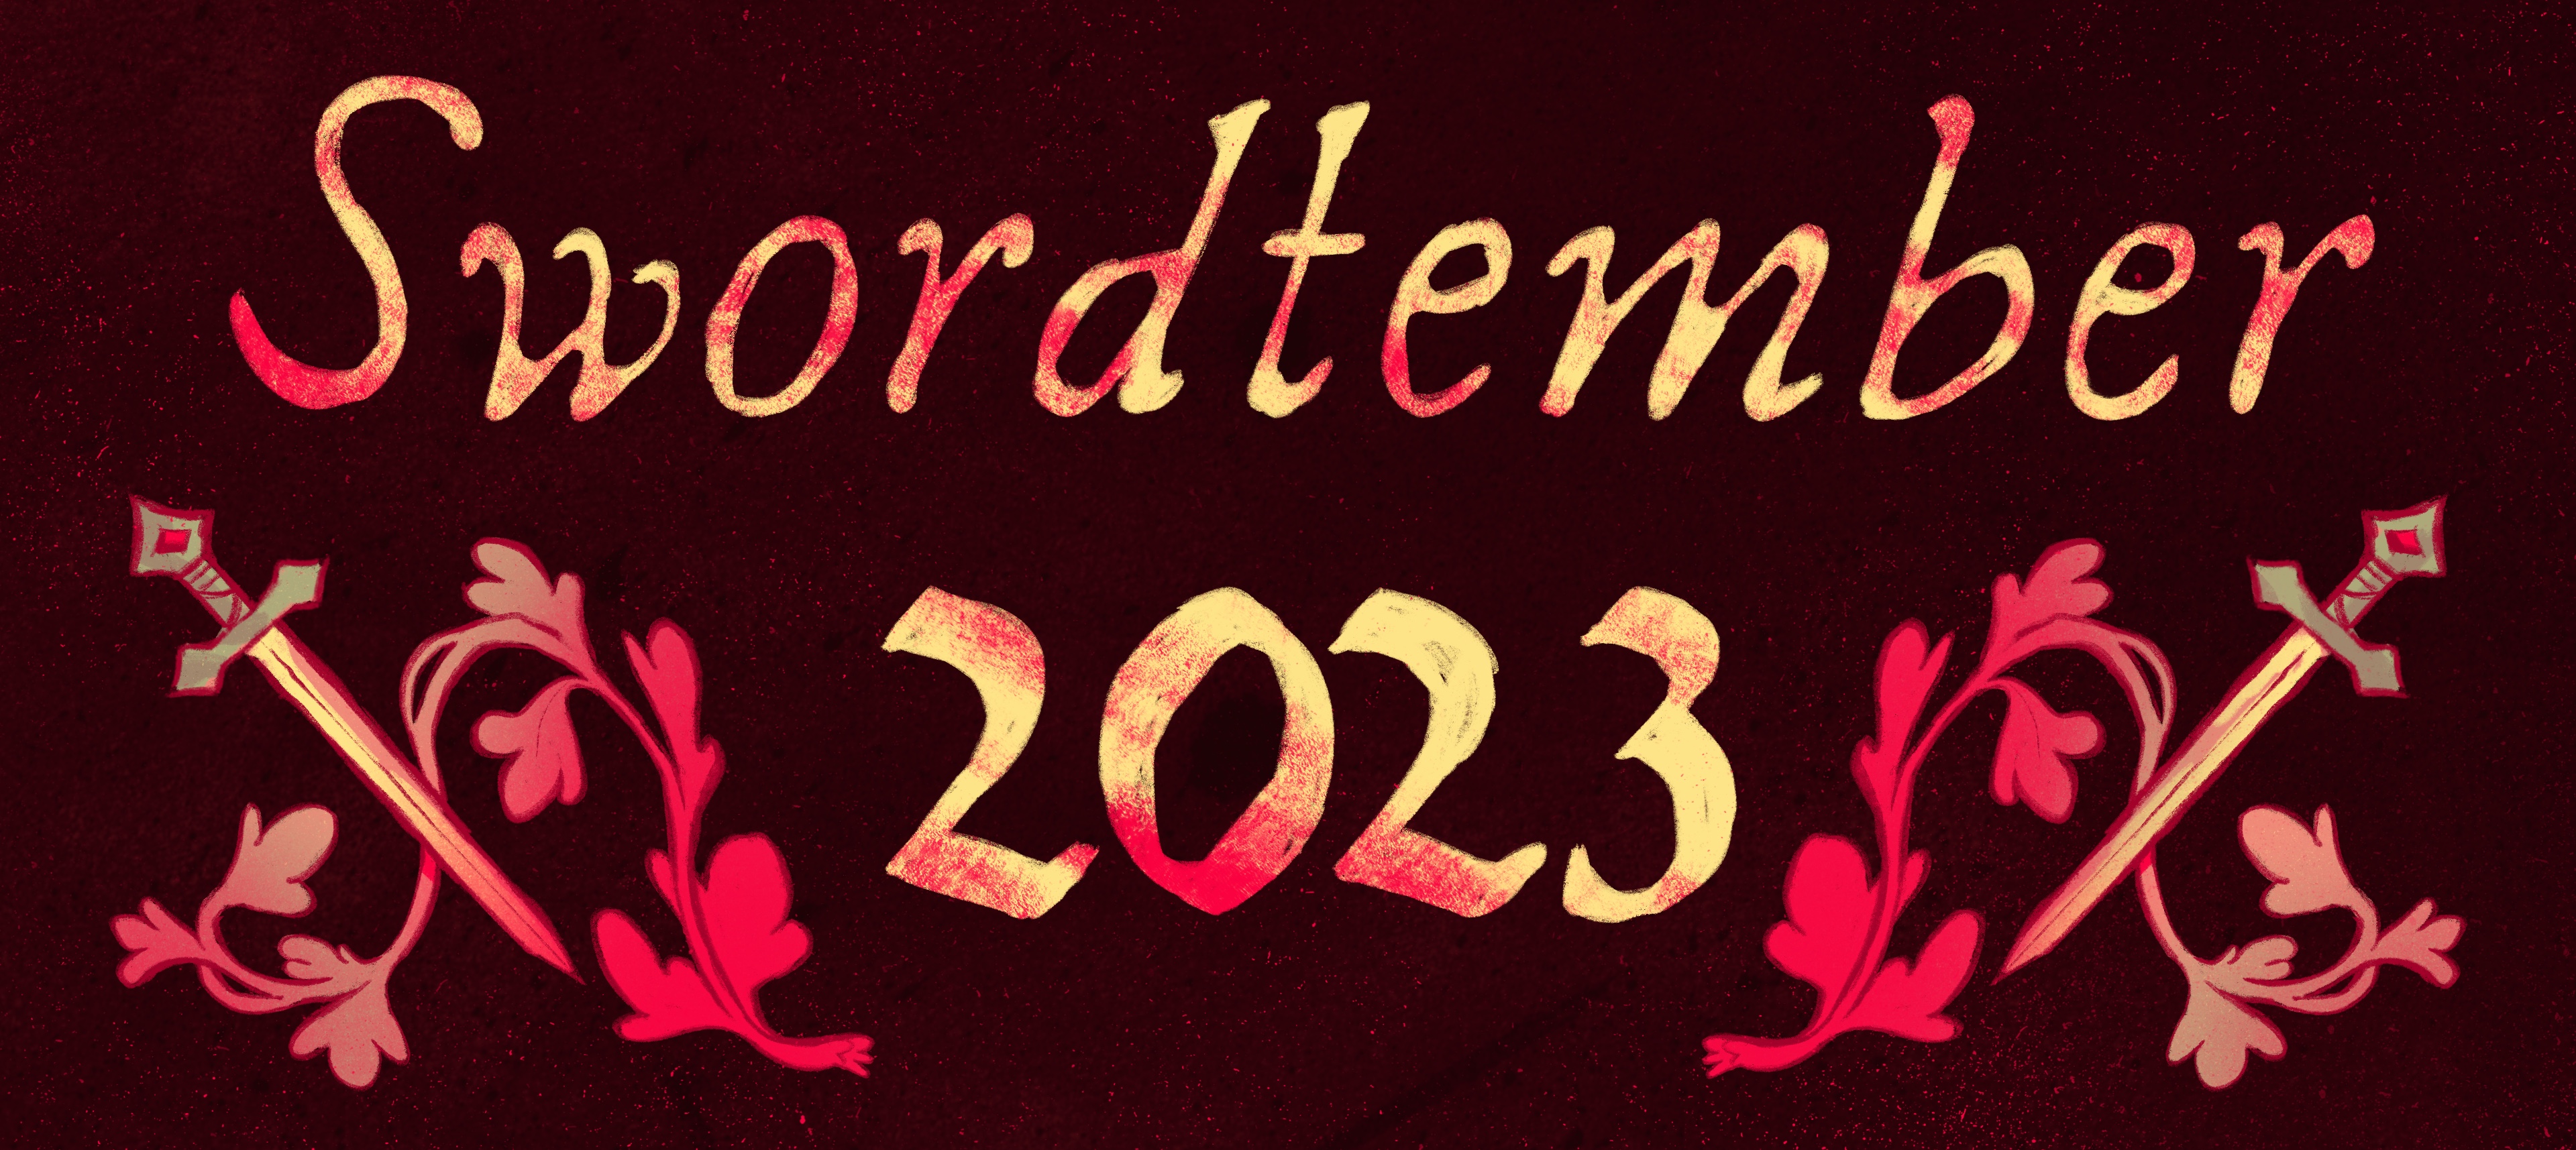 Swordtember 2023